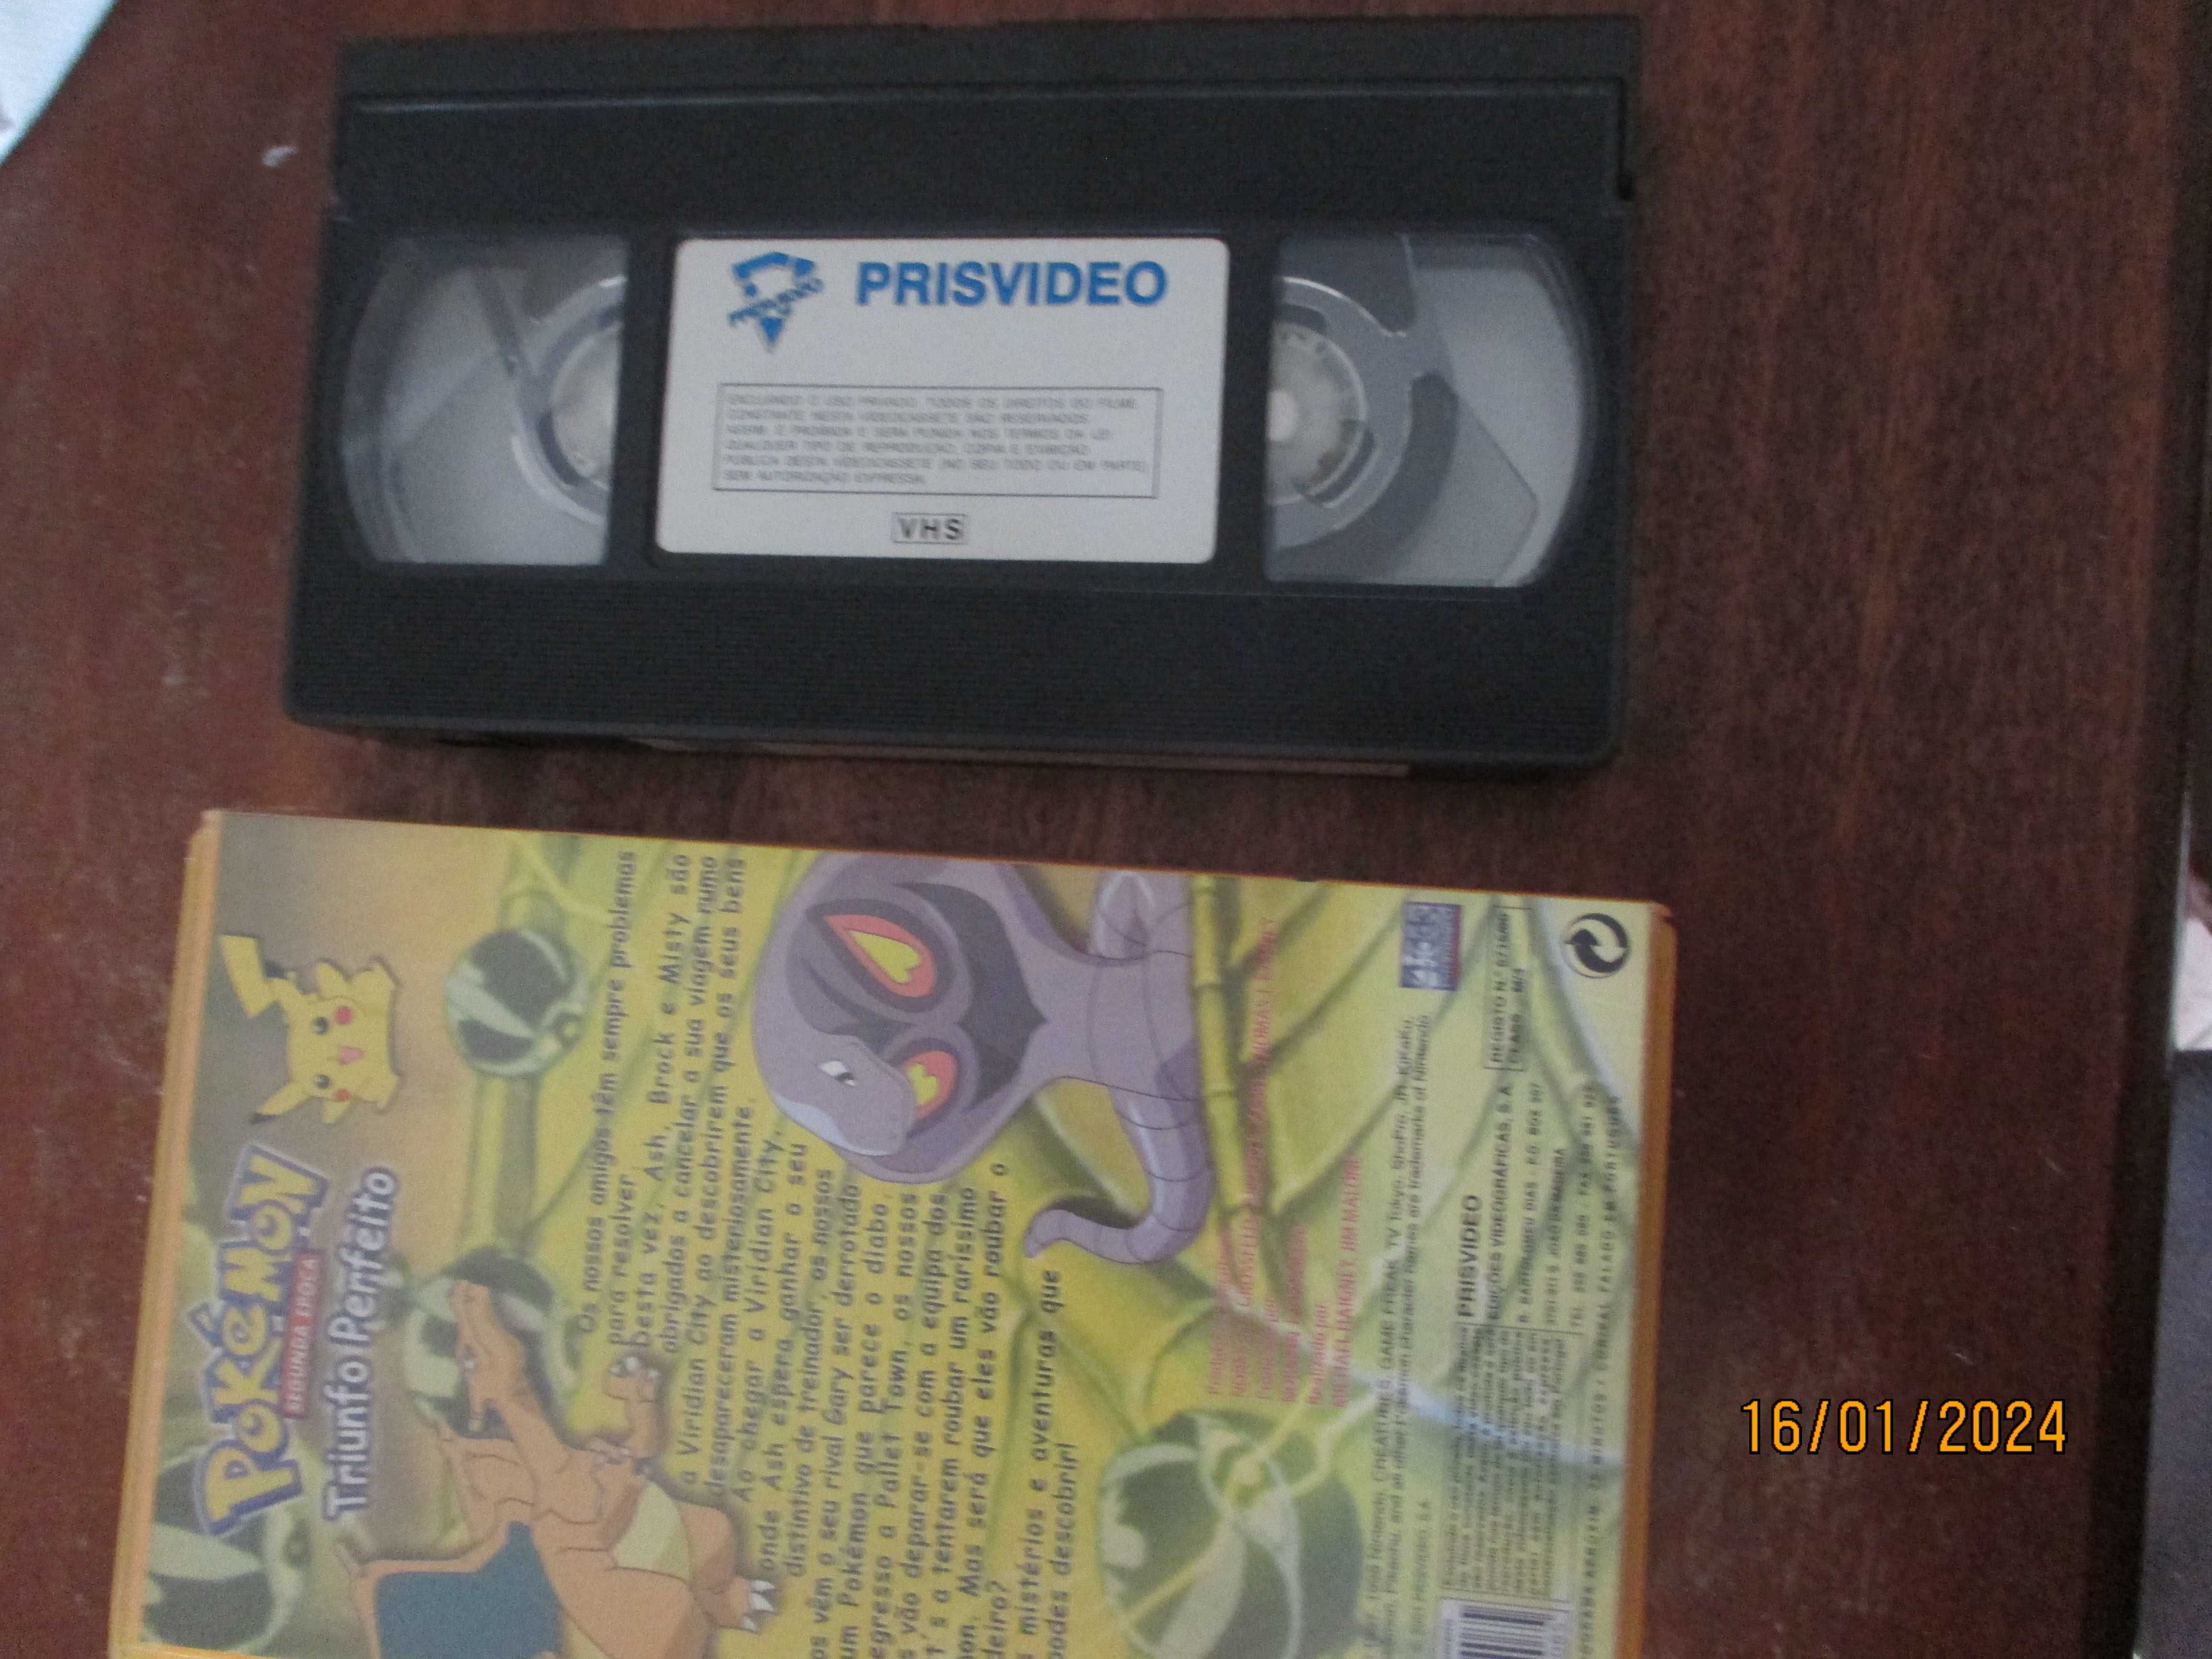 2 Cassetes VHS - Pokémon